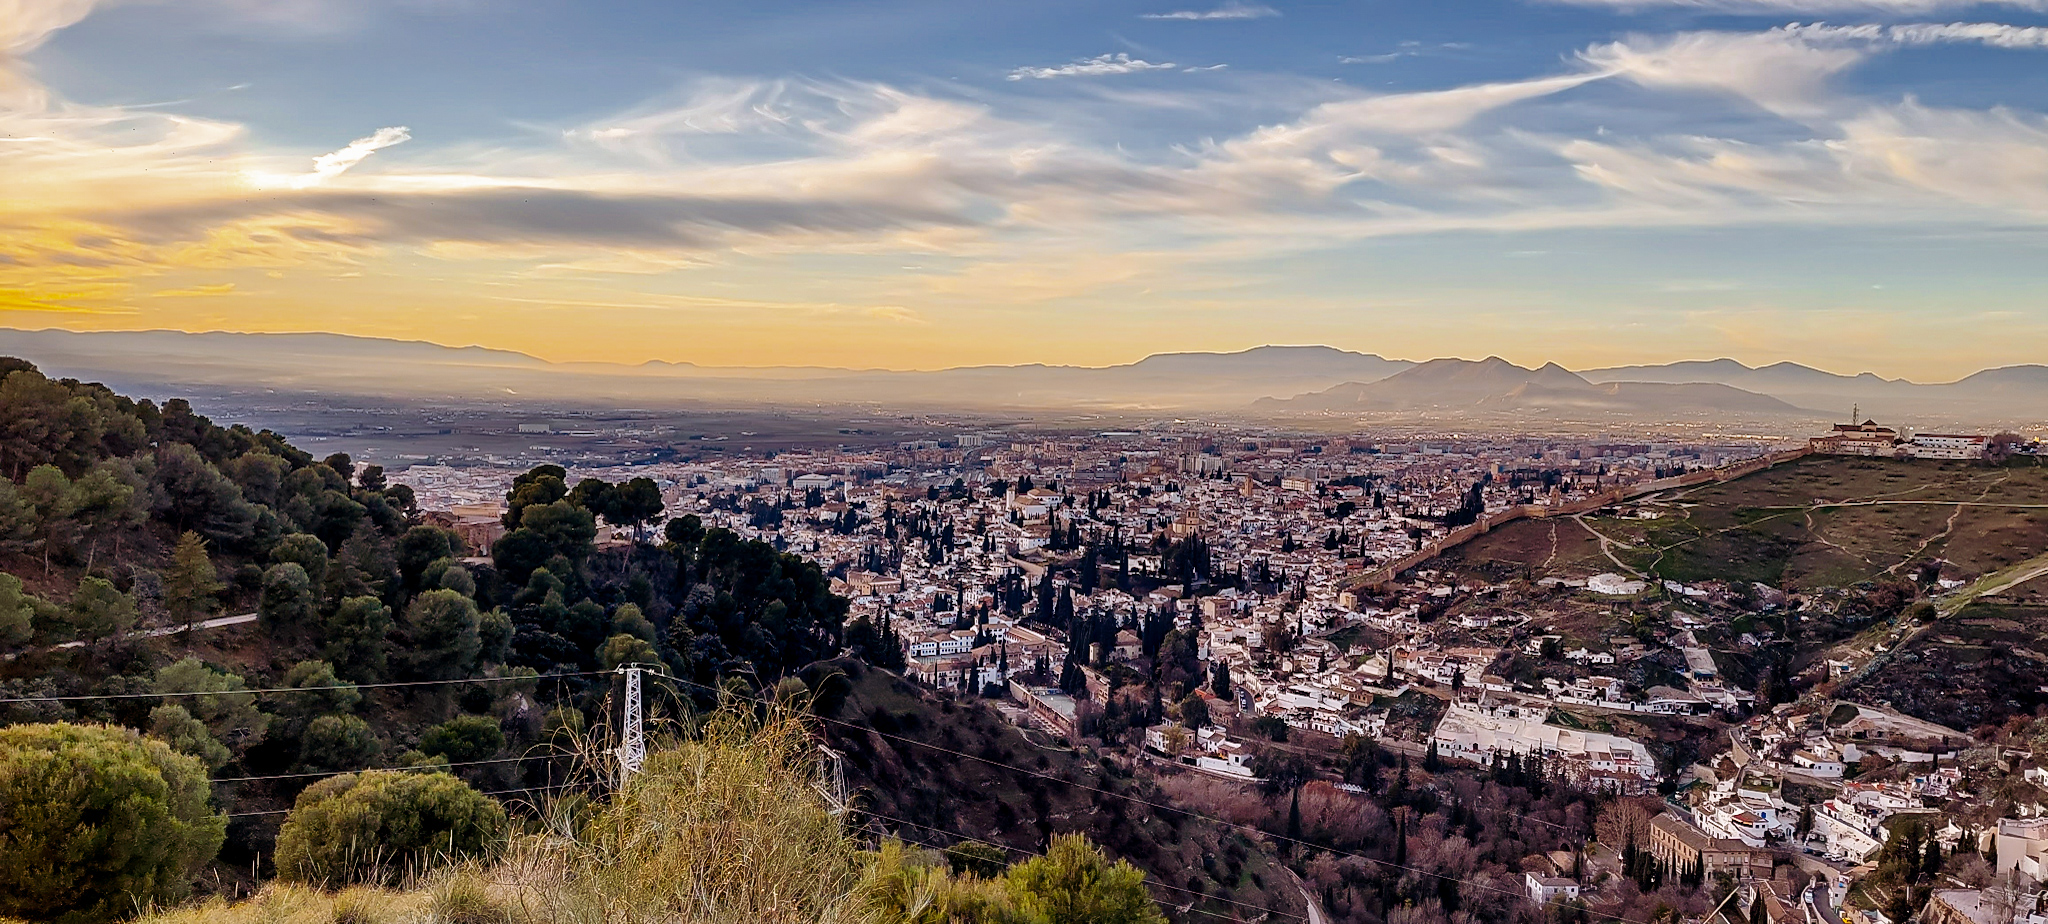 widok na miasto Granada z punktu widokowego Silla del Moro.